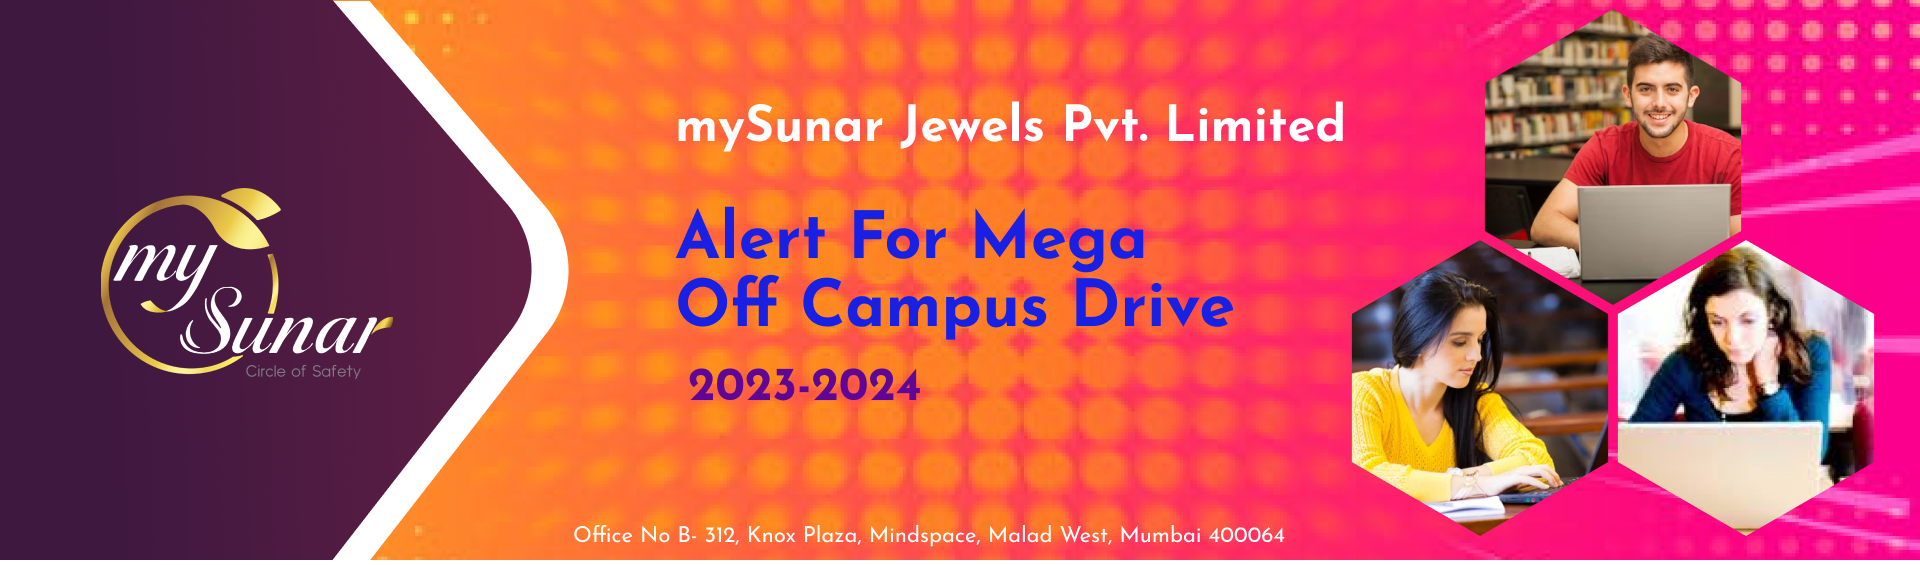 MySunar Jewels P Ltd